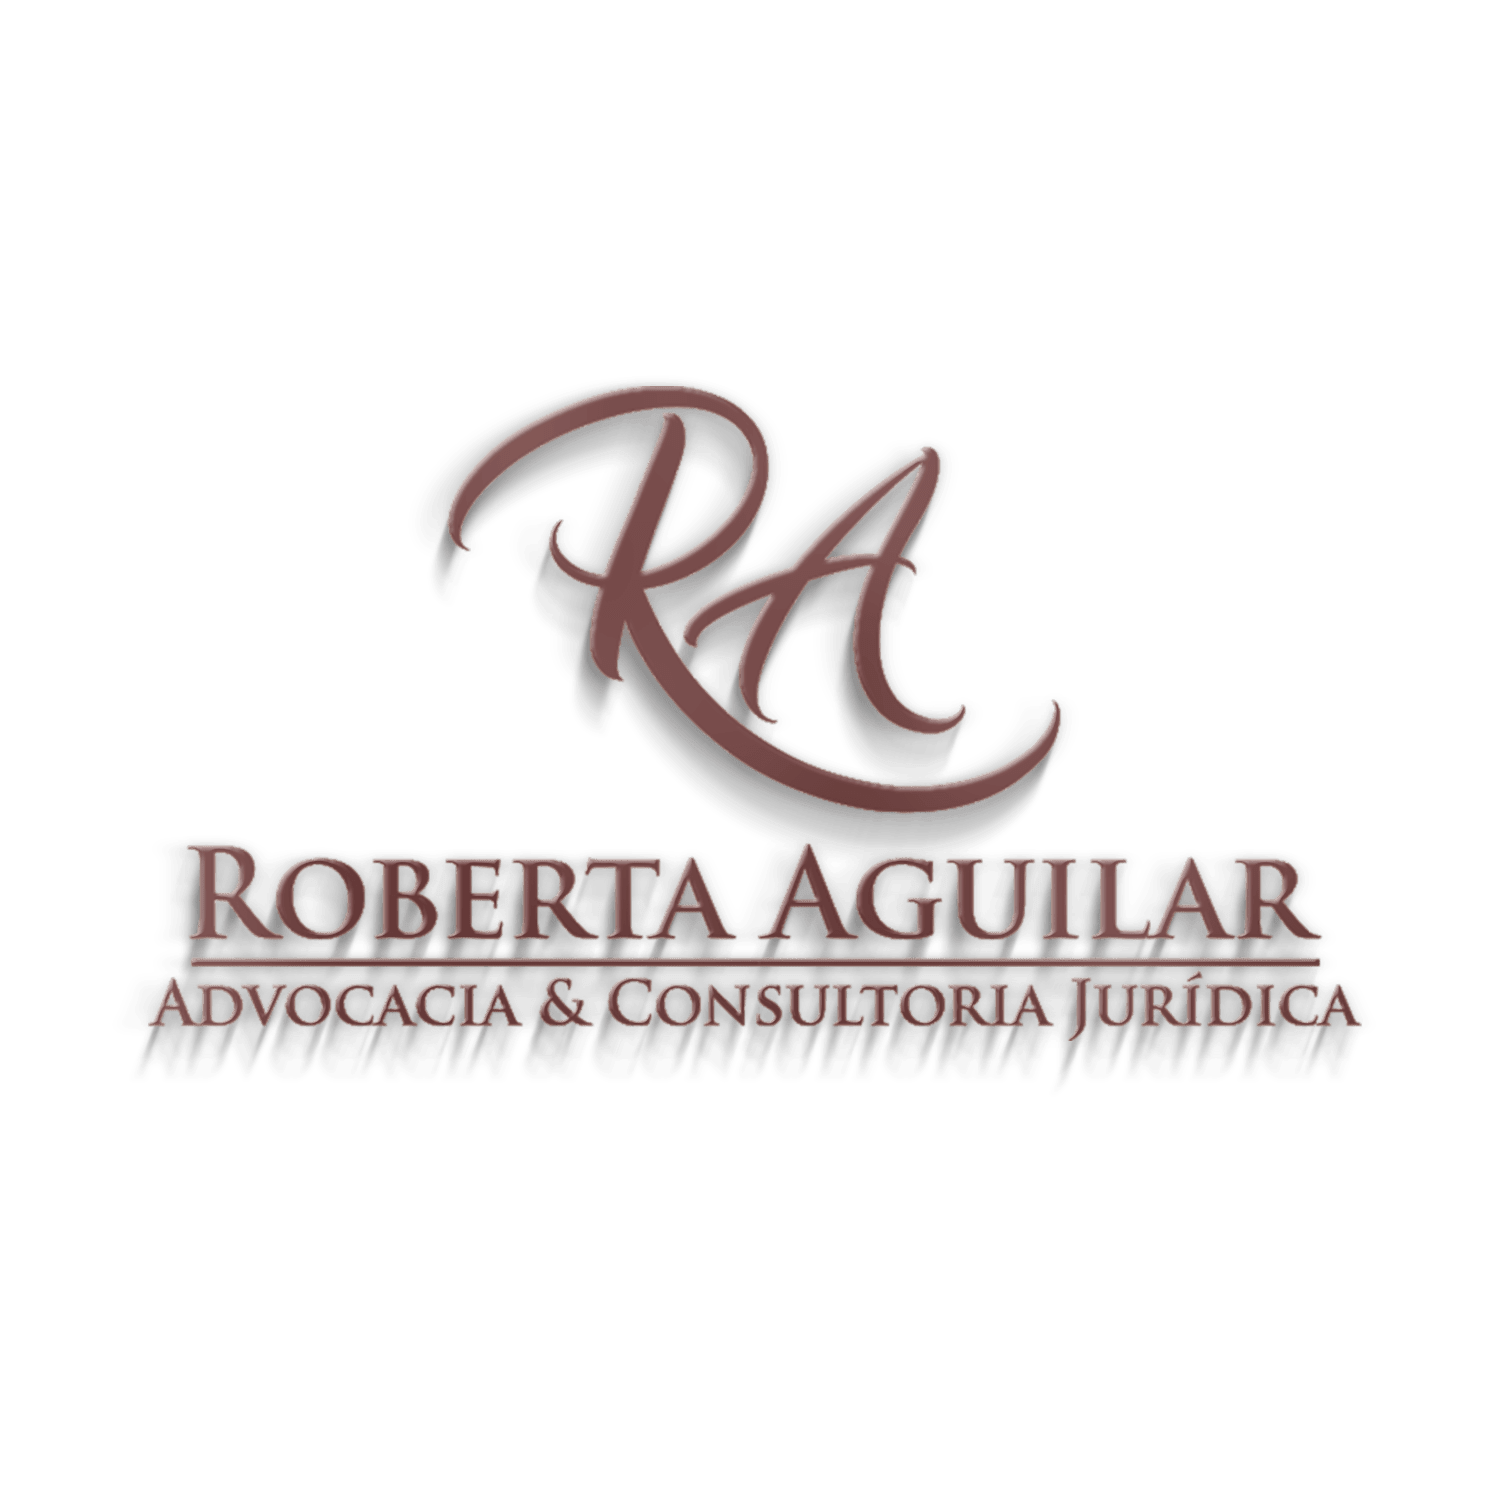 Roberta Aguilar Advocacia e Consultoria Jurídica